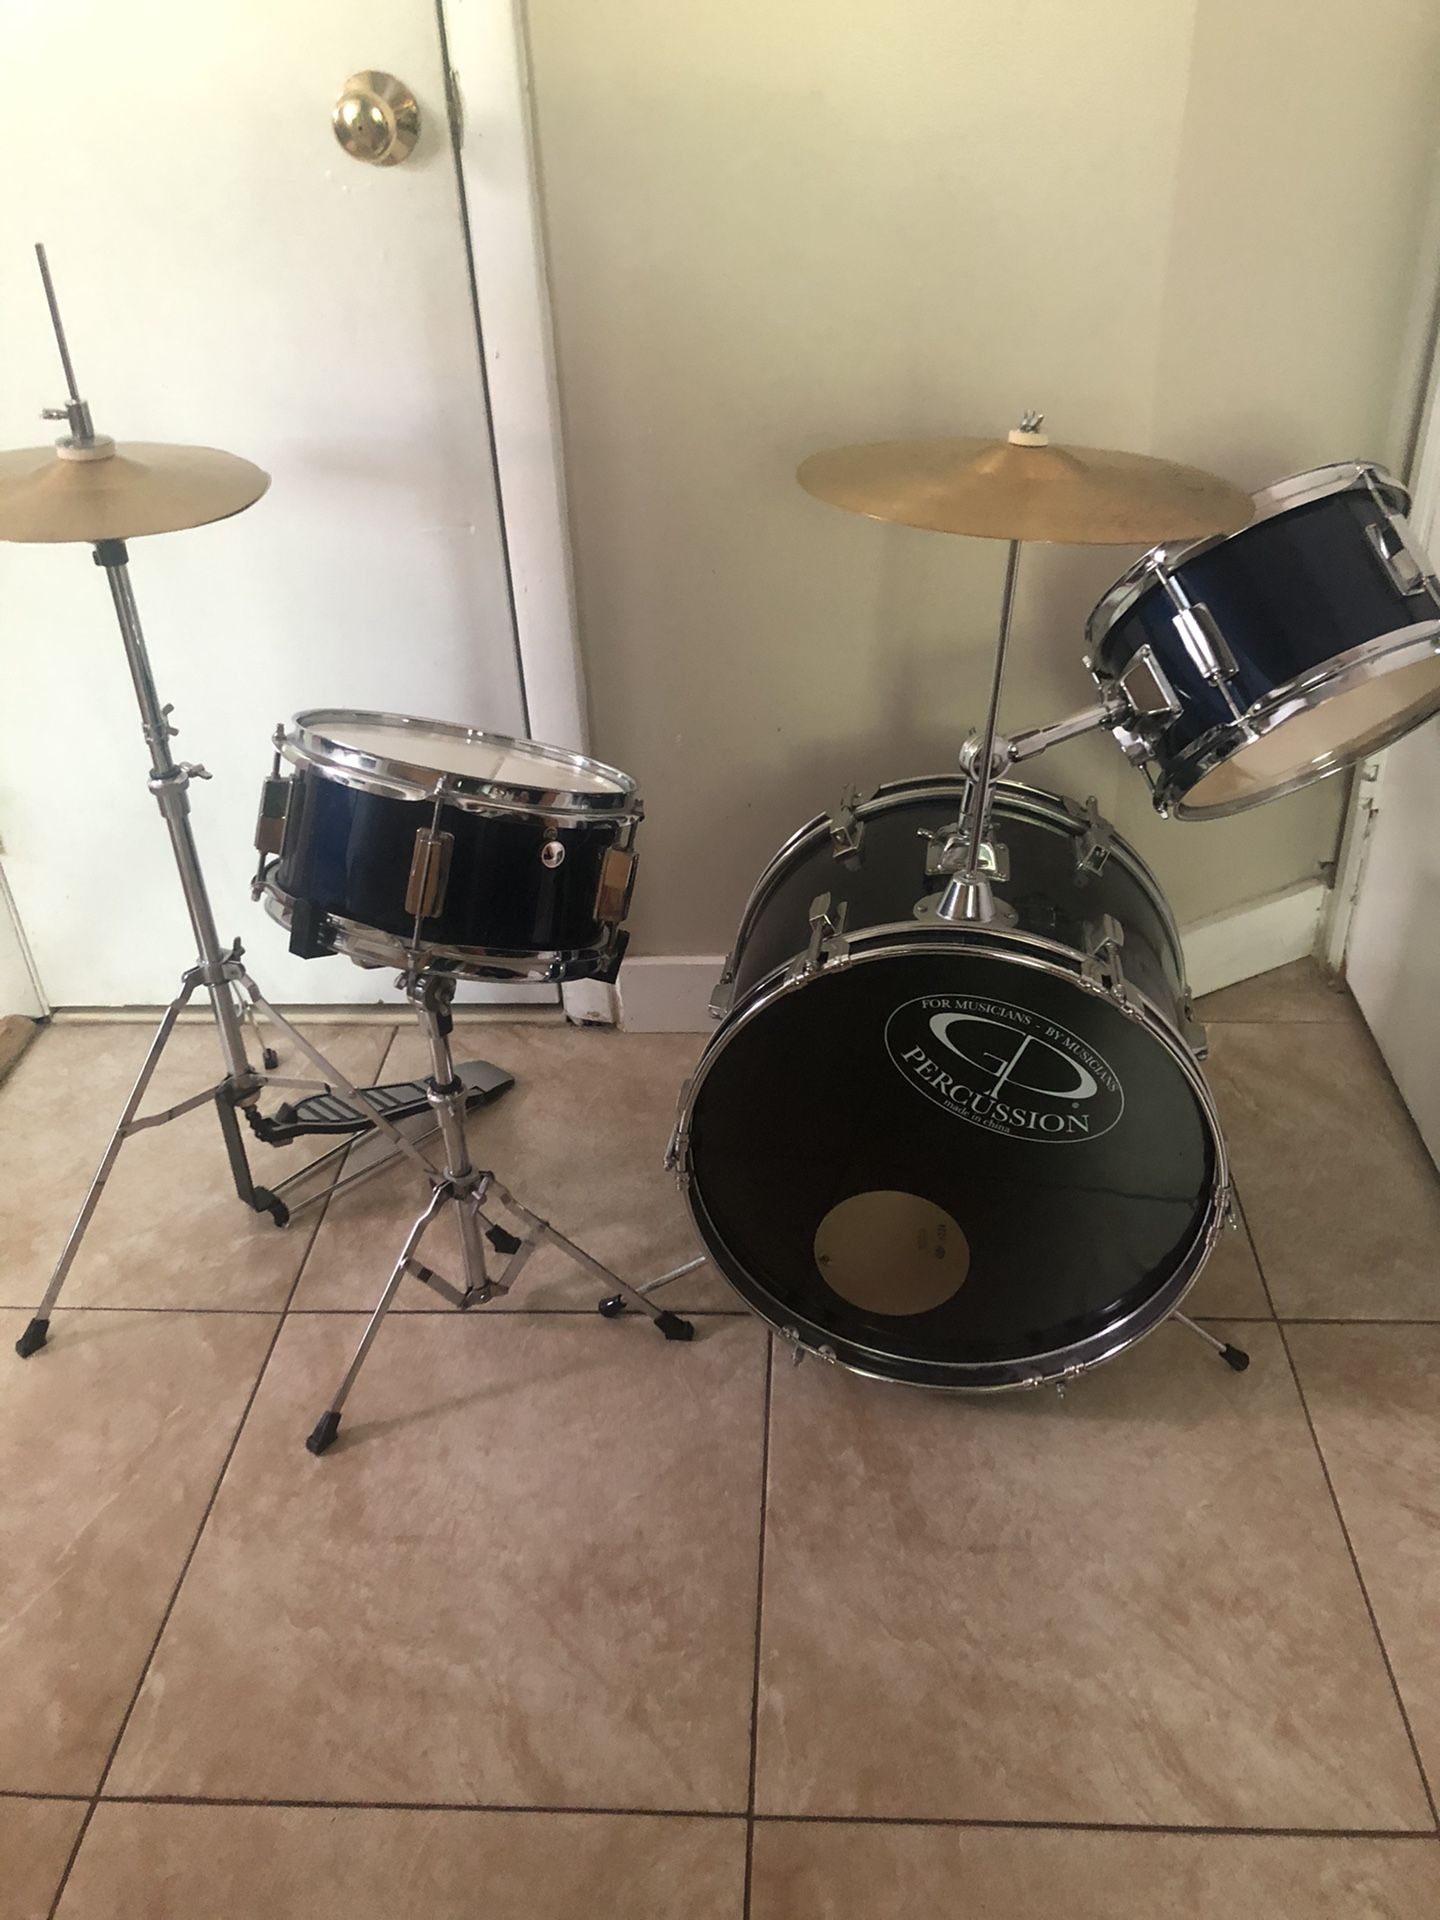 Drums kit for kids